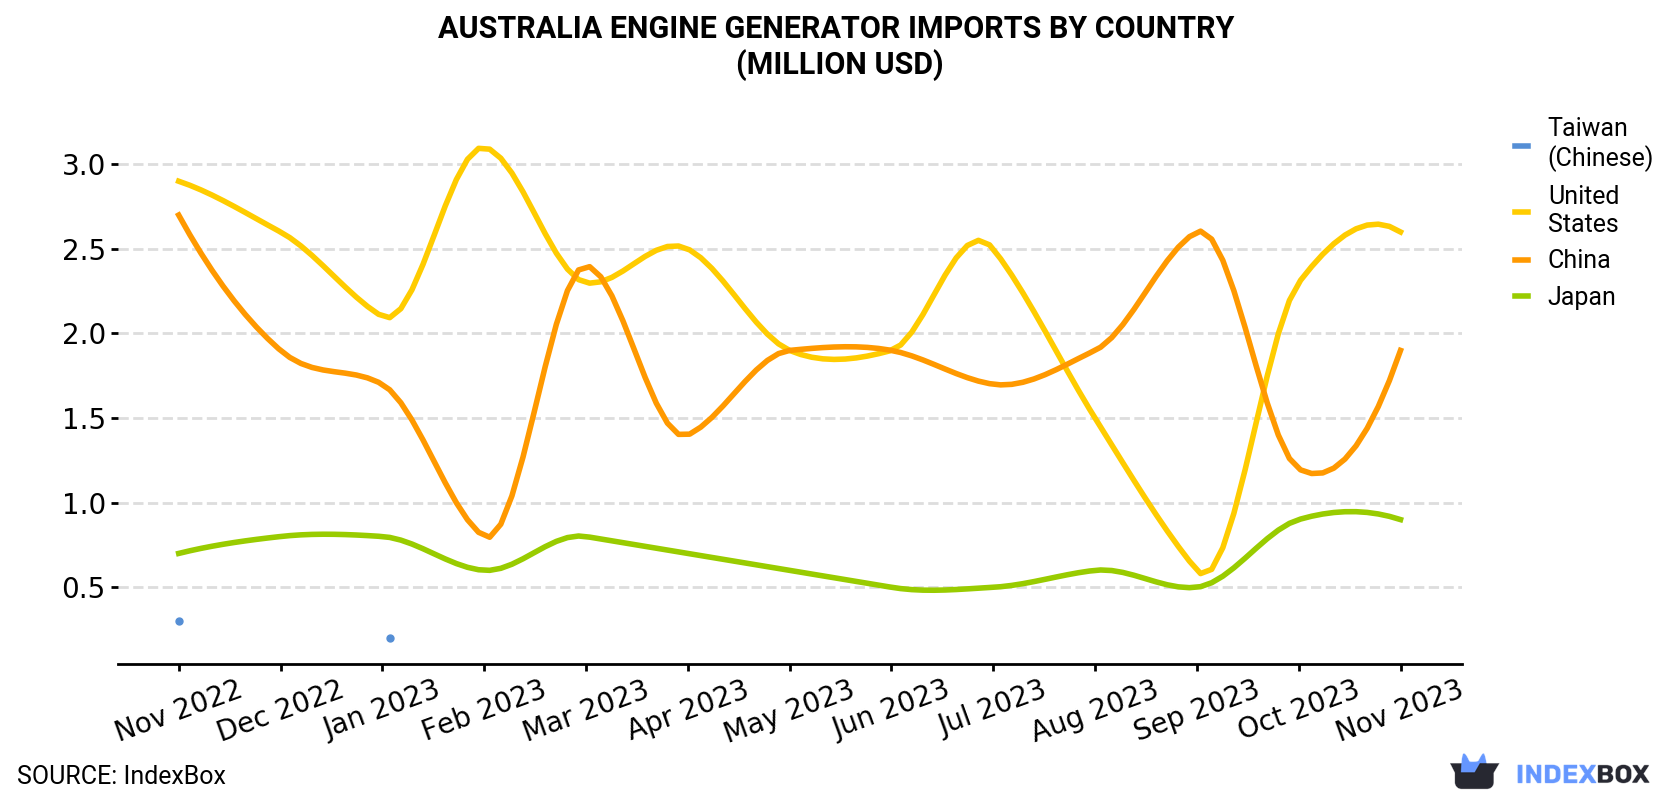 Australia Engine Generator Imports By Country (Million USD)